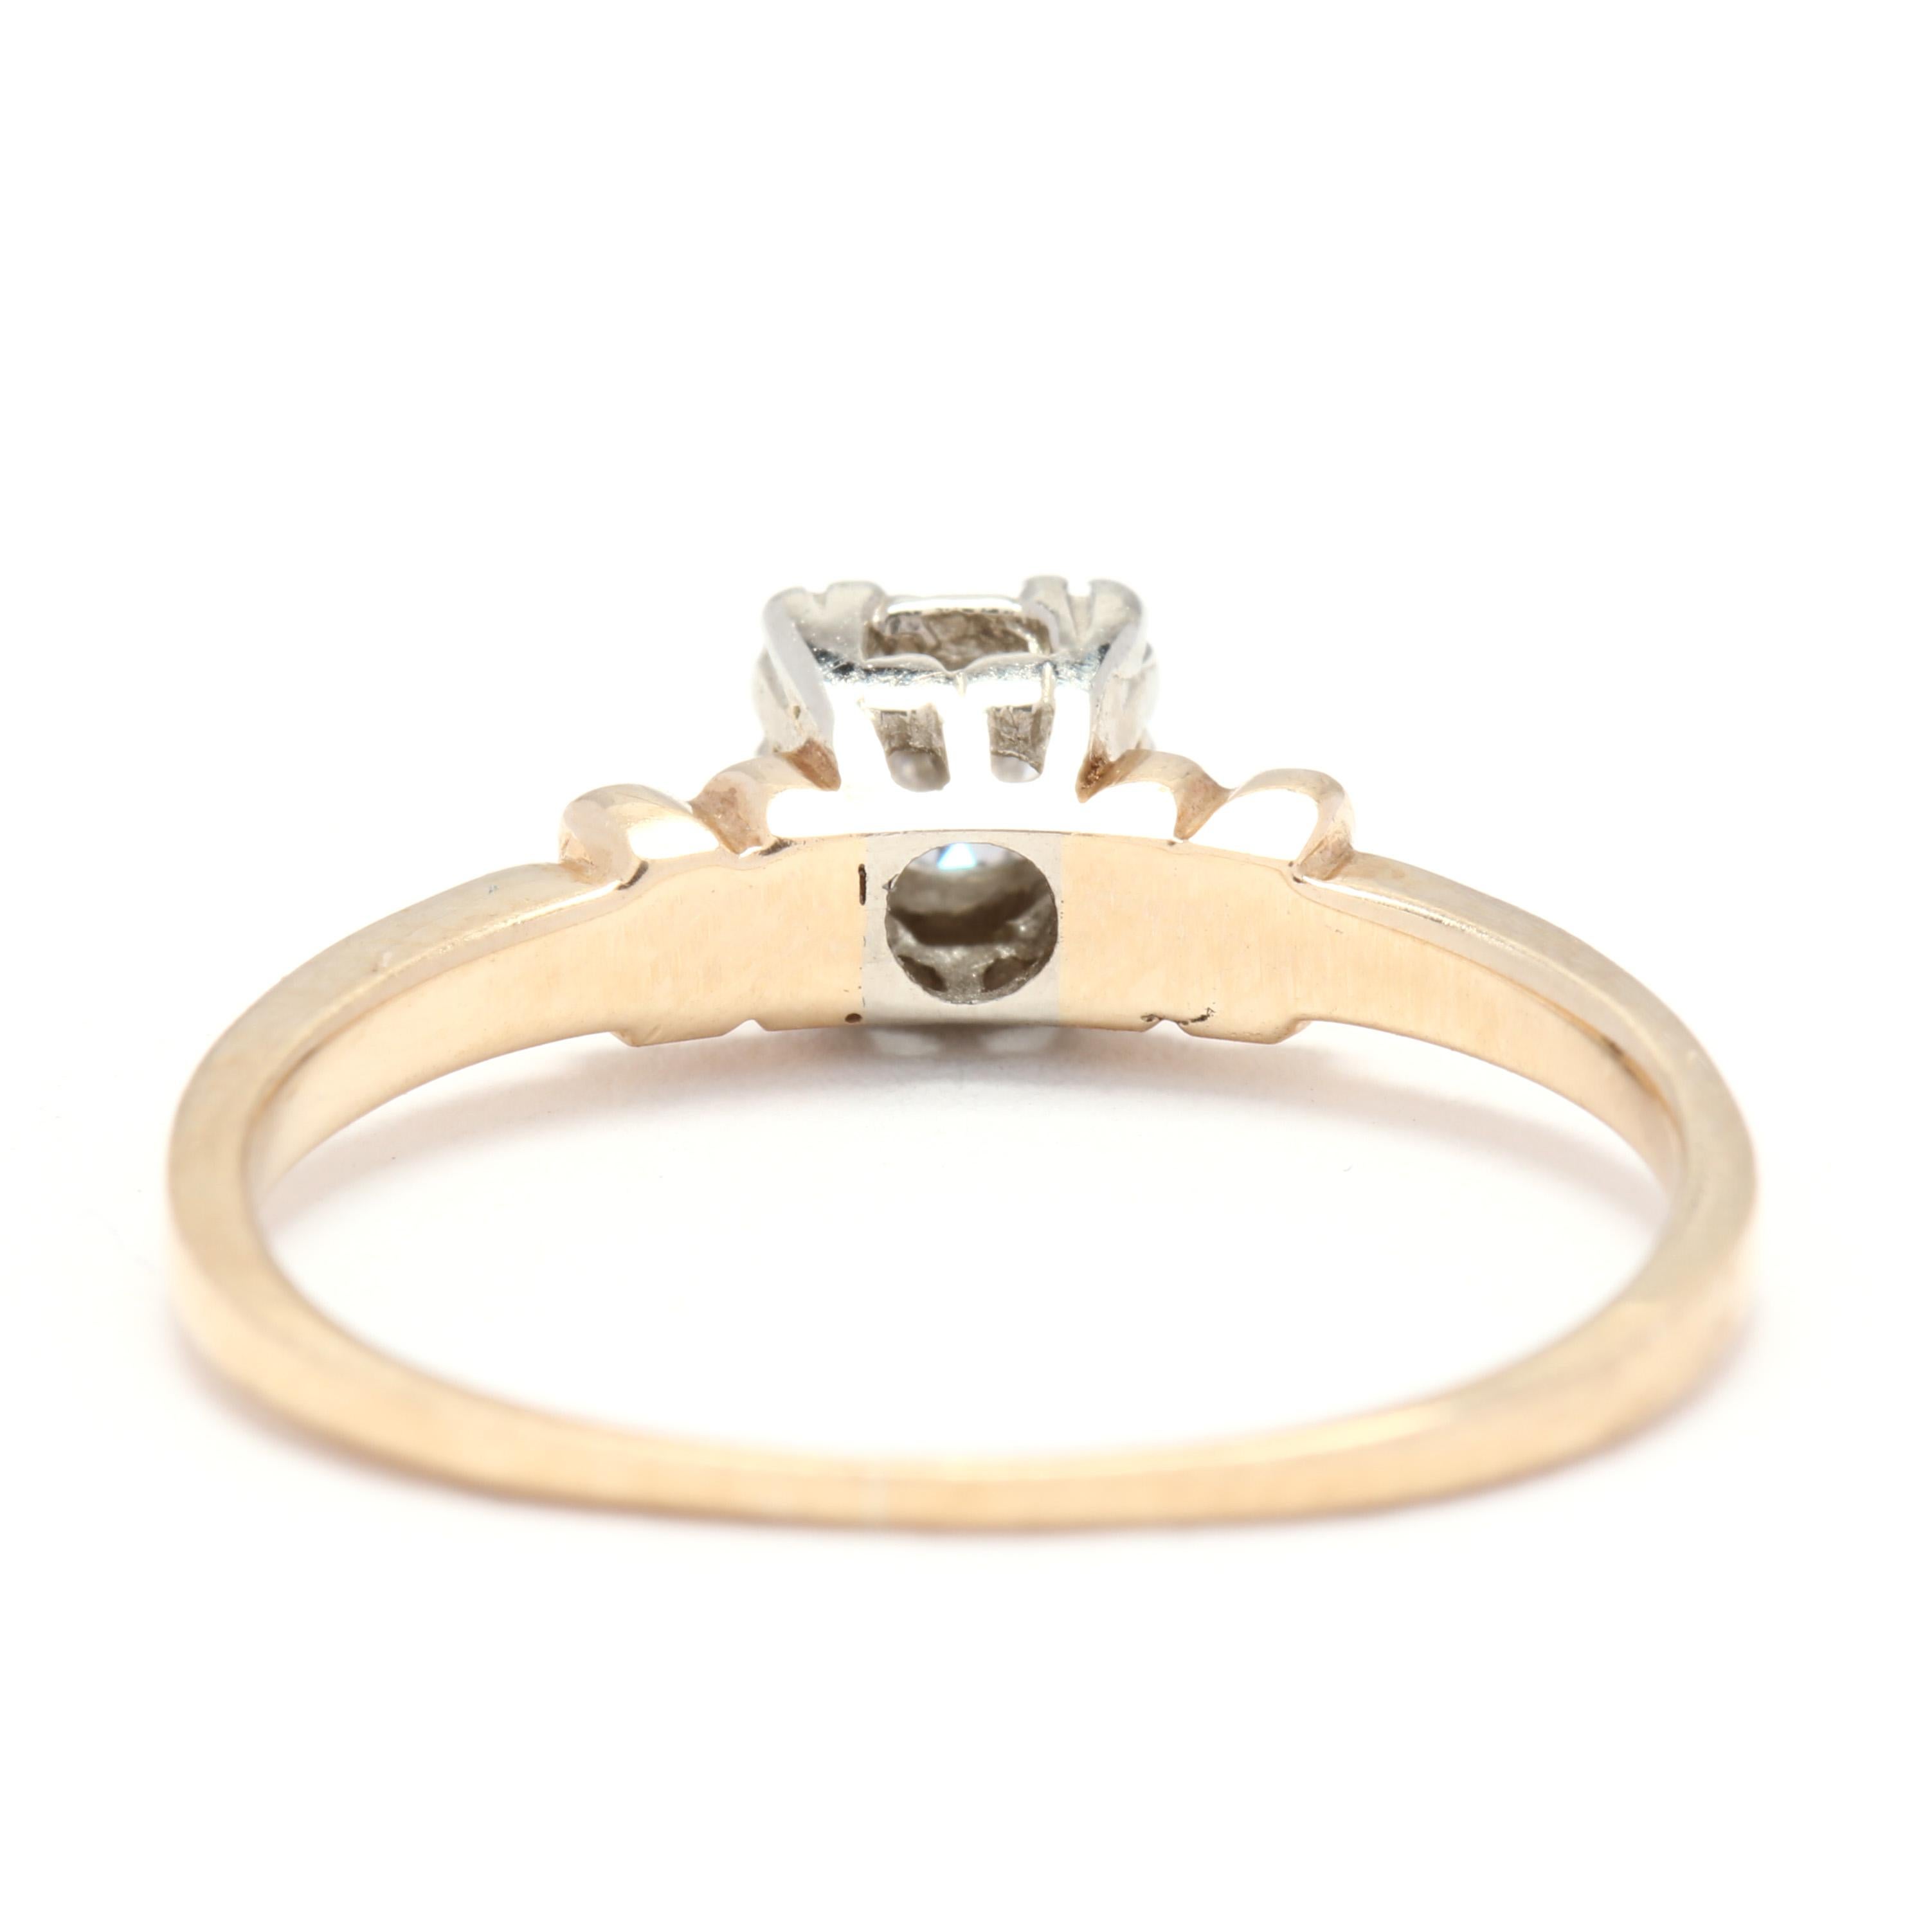 Art Deco Retro 14 Karat White and Yellow Gold Diamond Engagement Ring